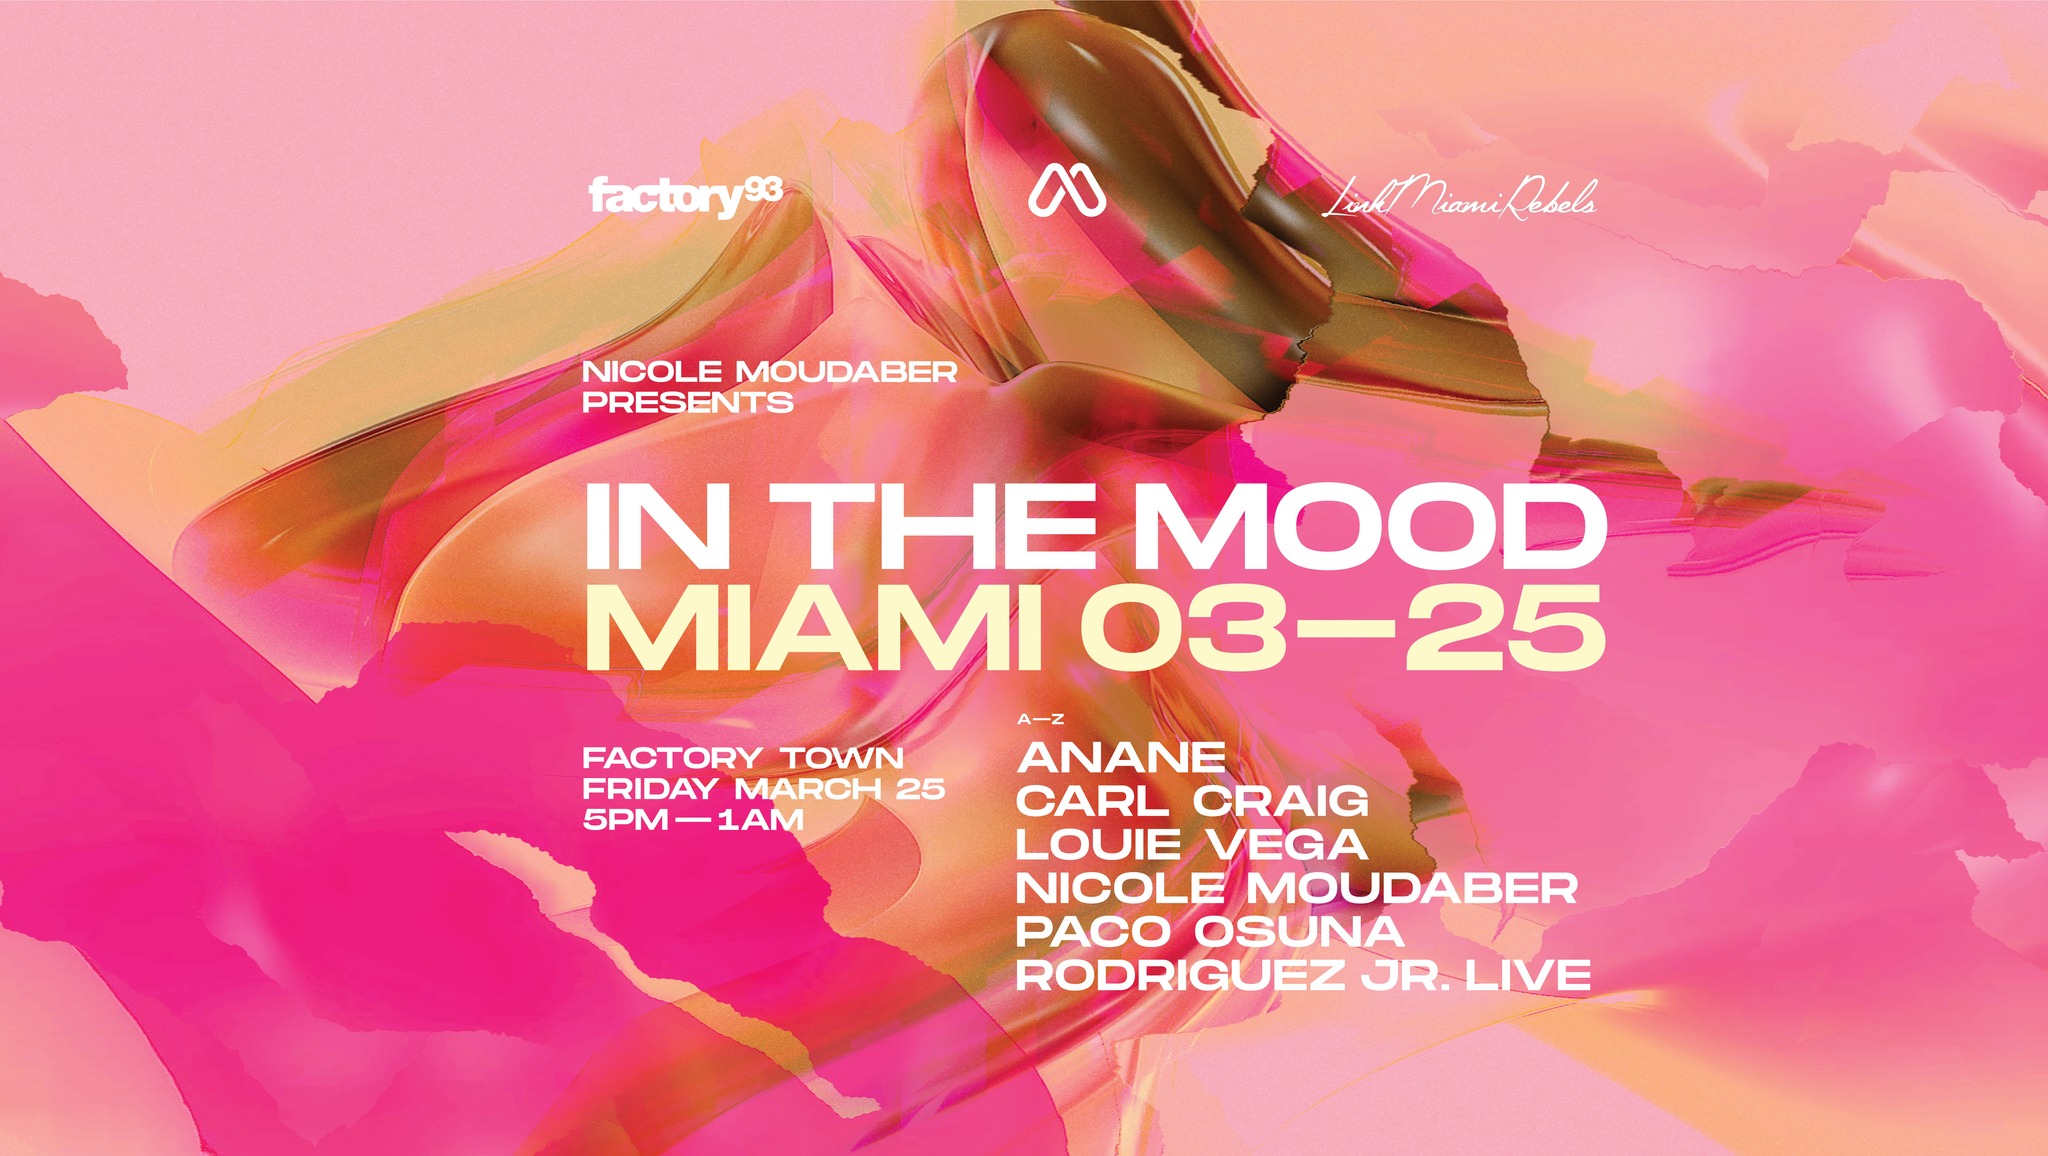 Nicole Moudaber presents In The Mood Miami Image